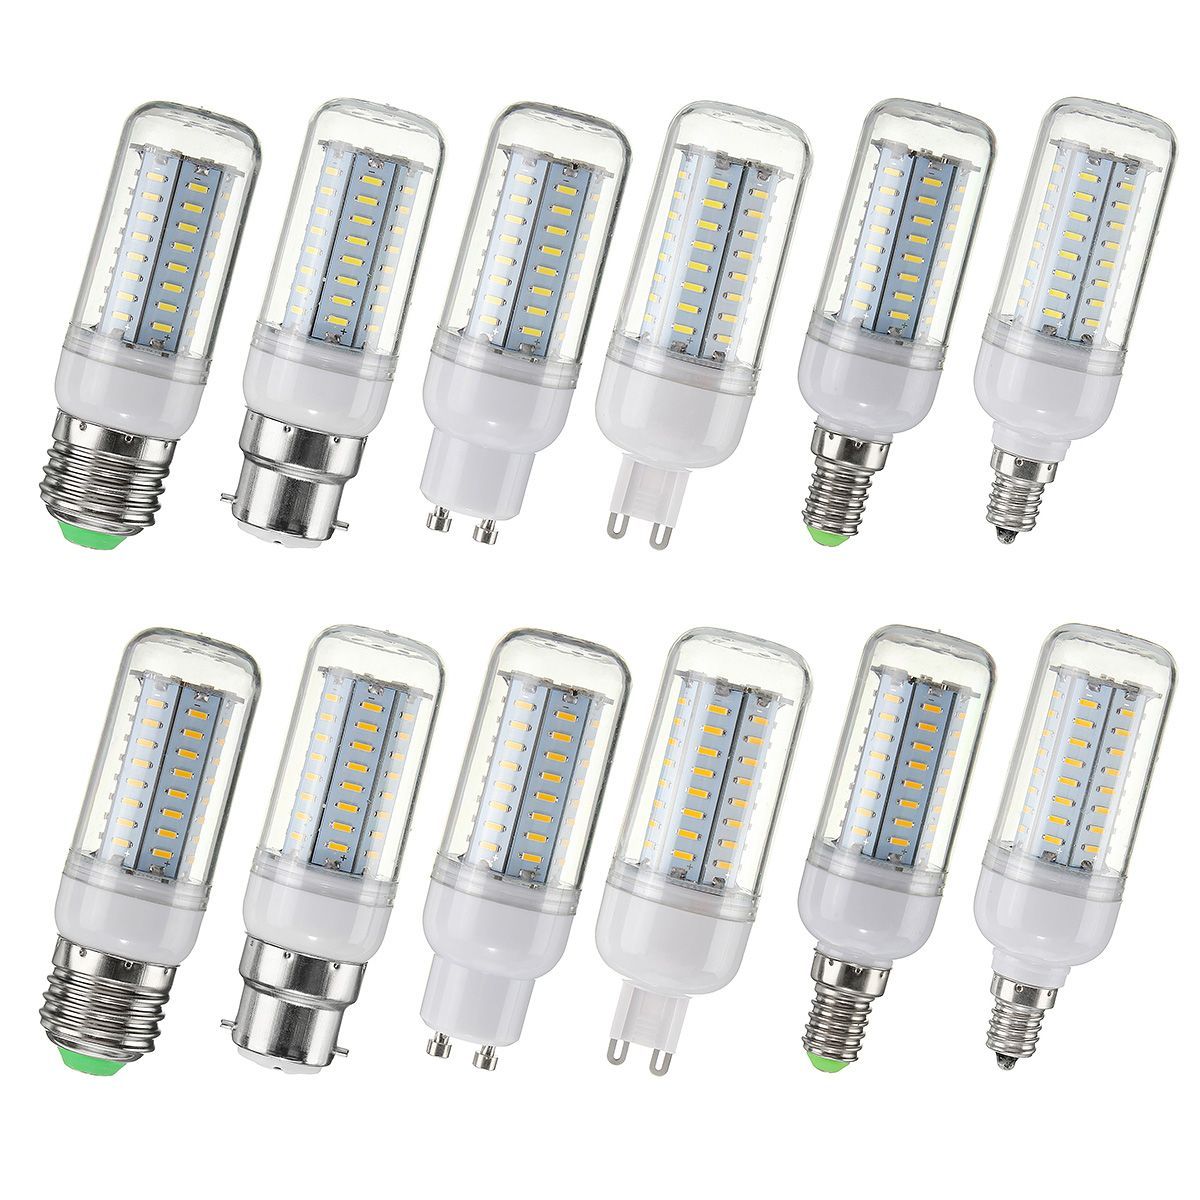 Dimmable-E14E27G9GU10B22E12-SMD4014-5W-LED-Corn-Bulb-Light-Home-Lamp-AC220V-1127313